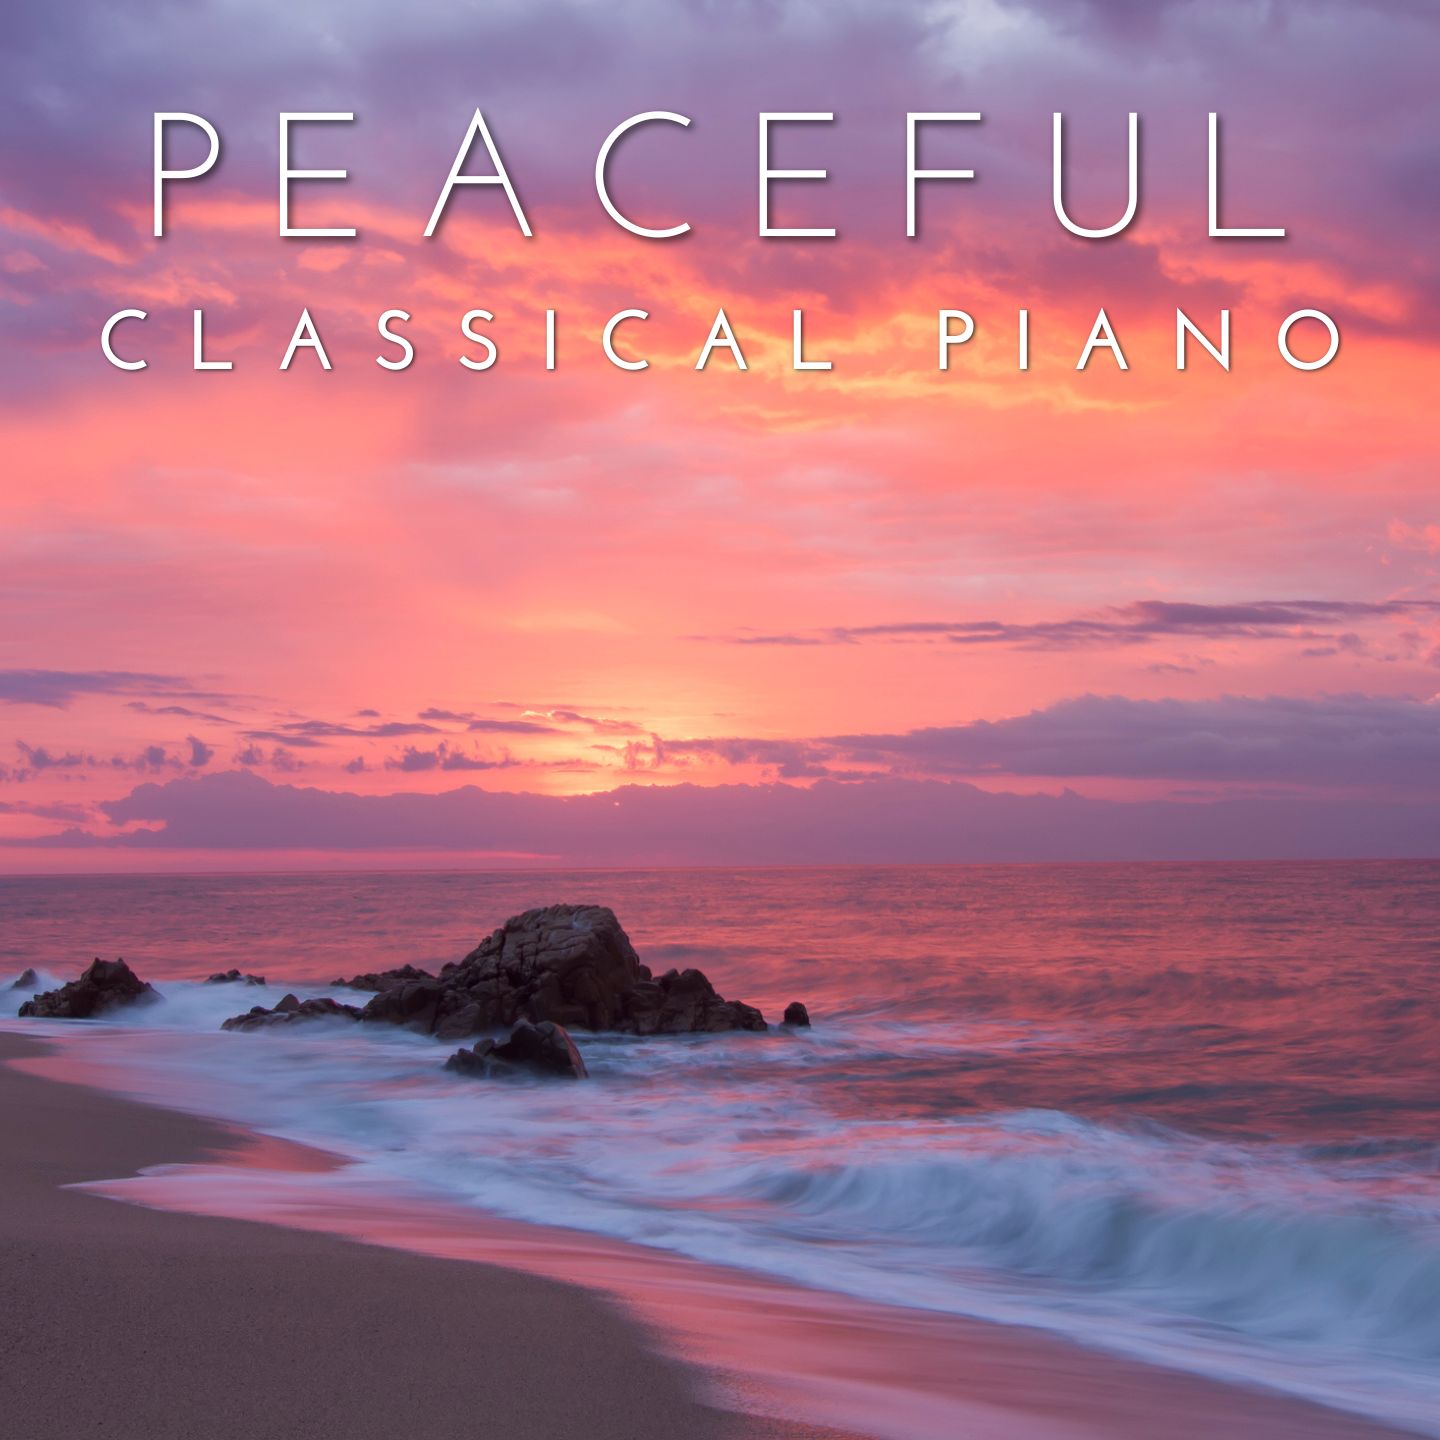 Peaceful Classical Piano